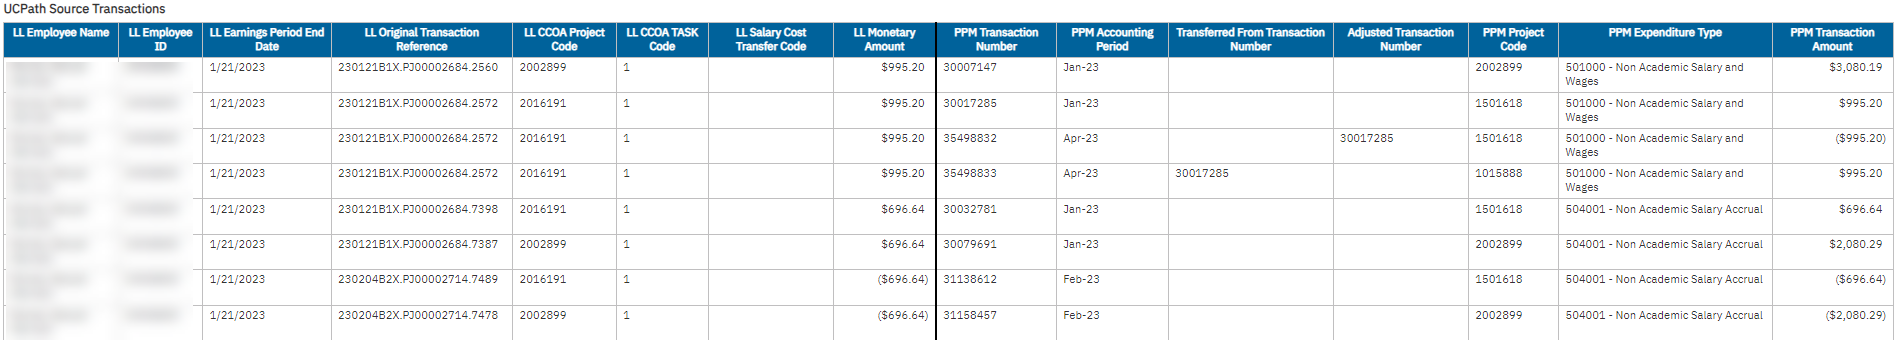 Payroll Transactions Lookup - UCPath Source Transactions